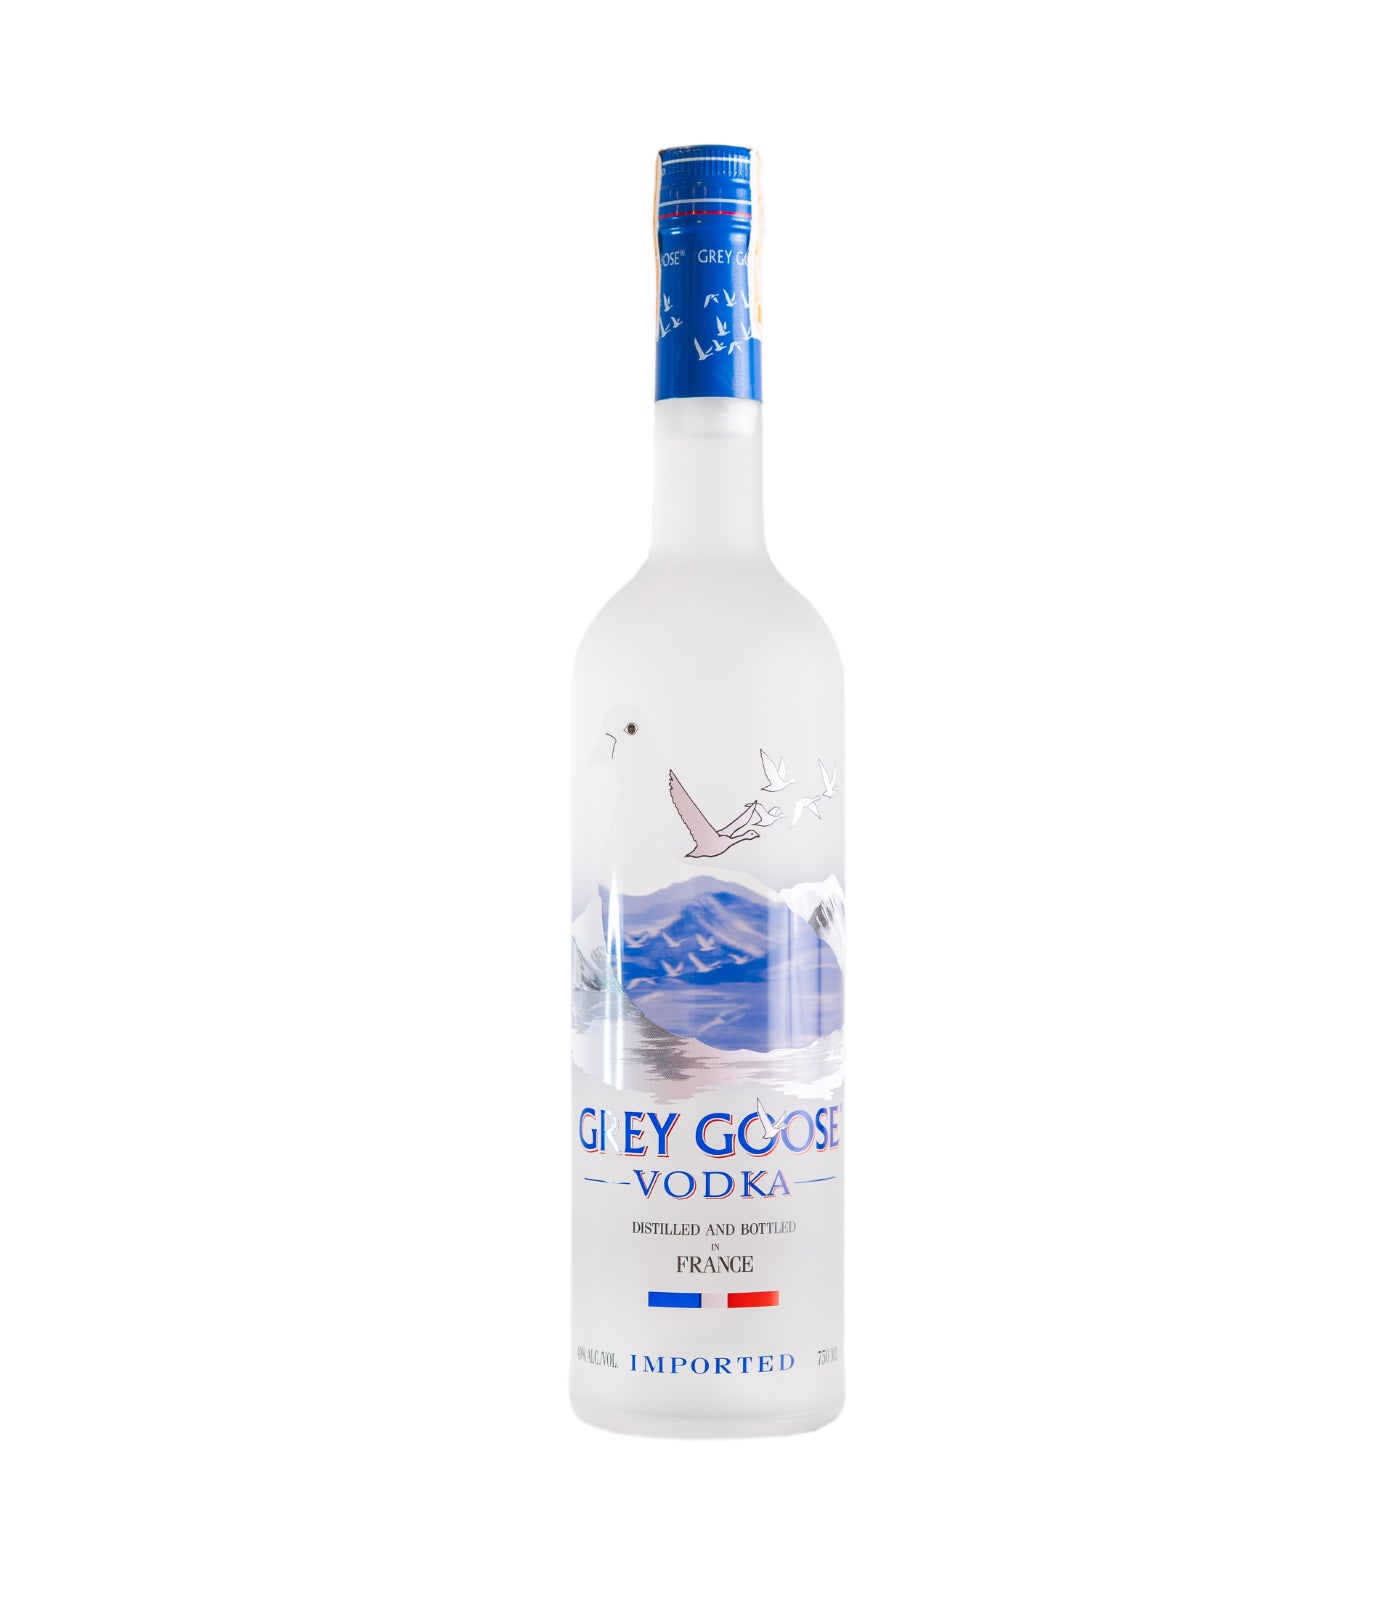 Greygoose Vodka 750ml